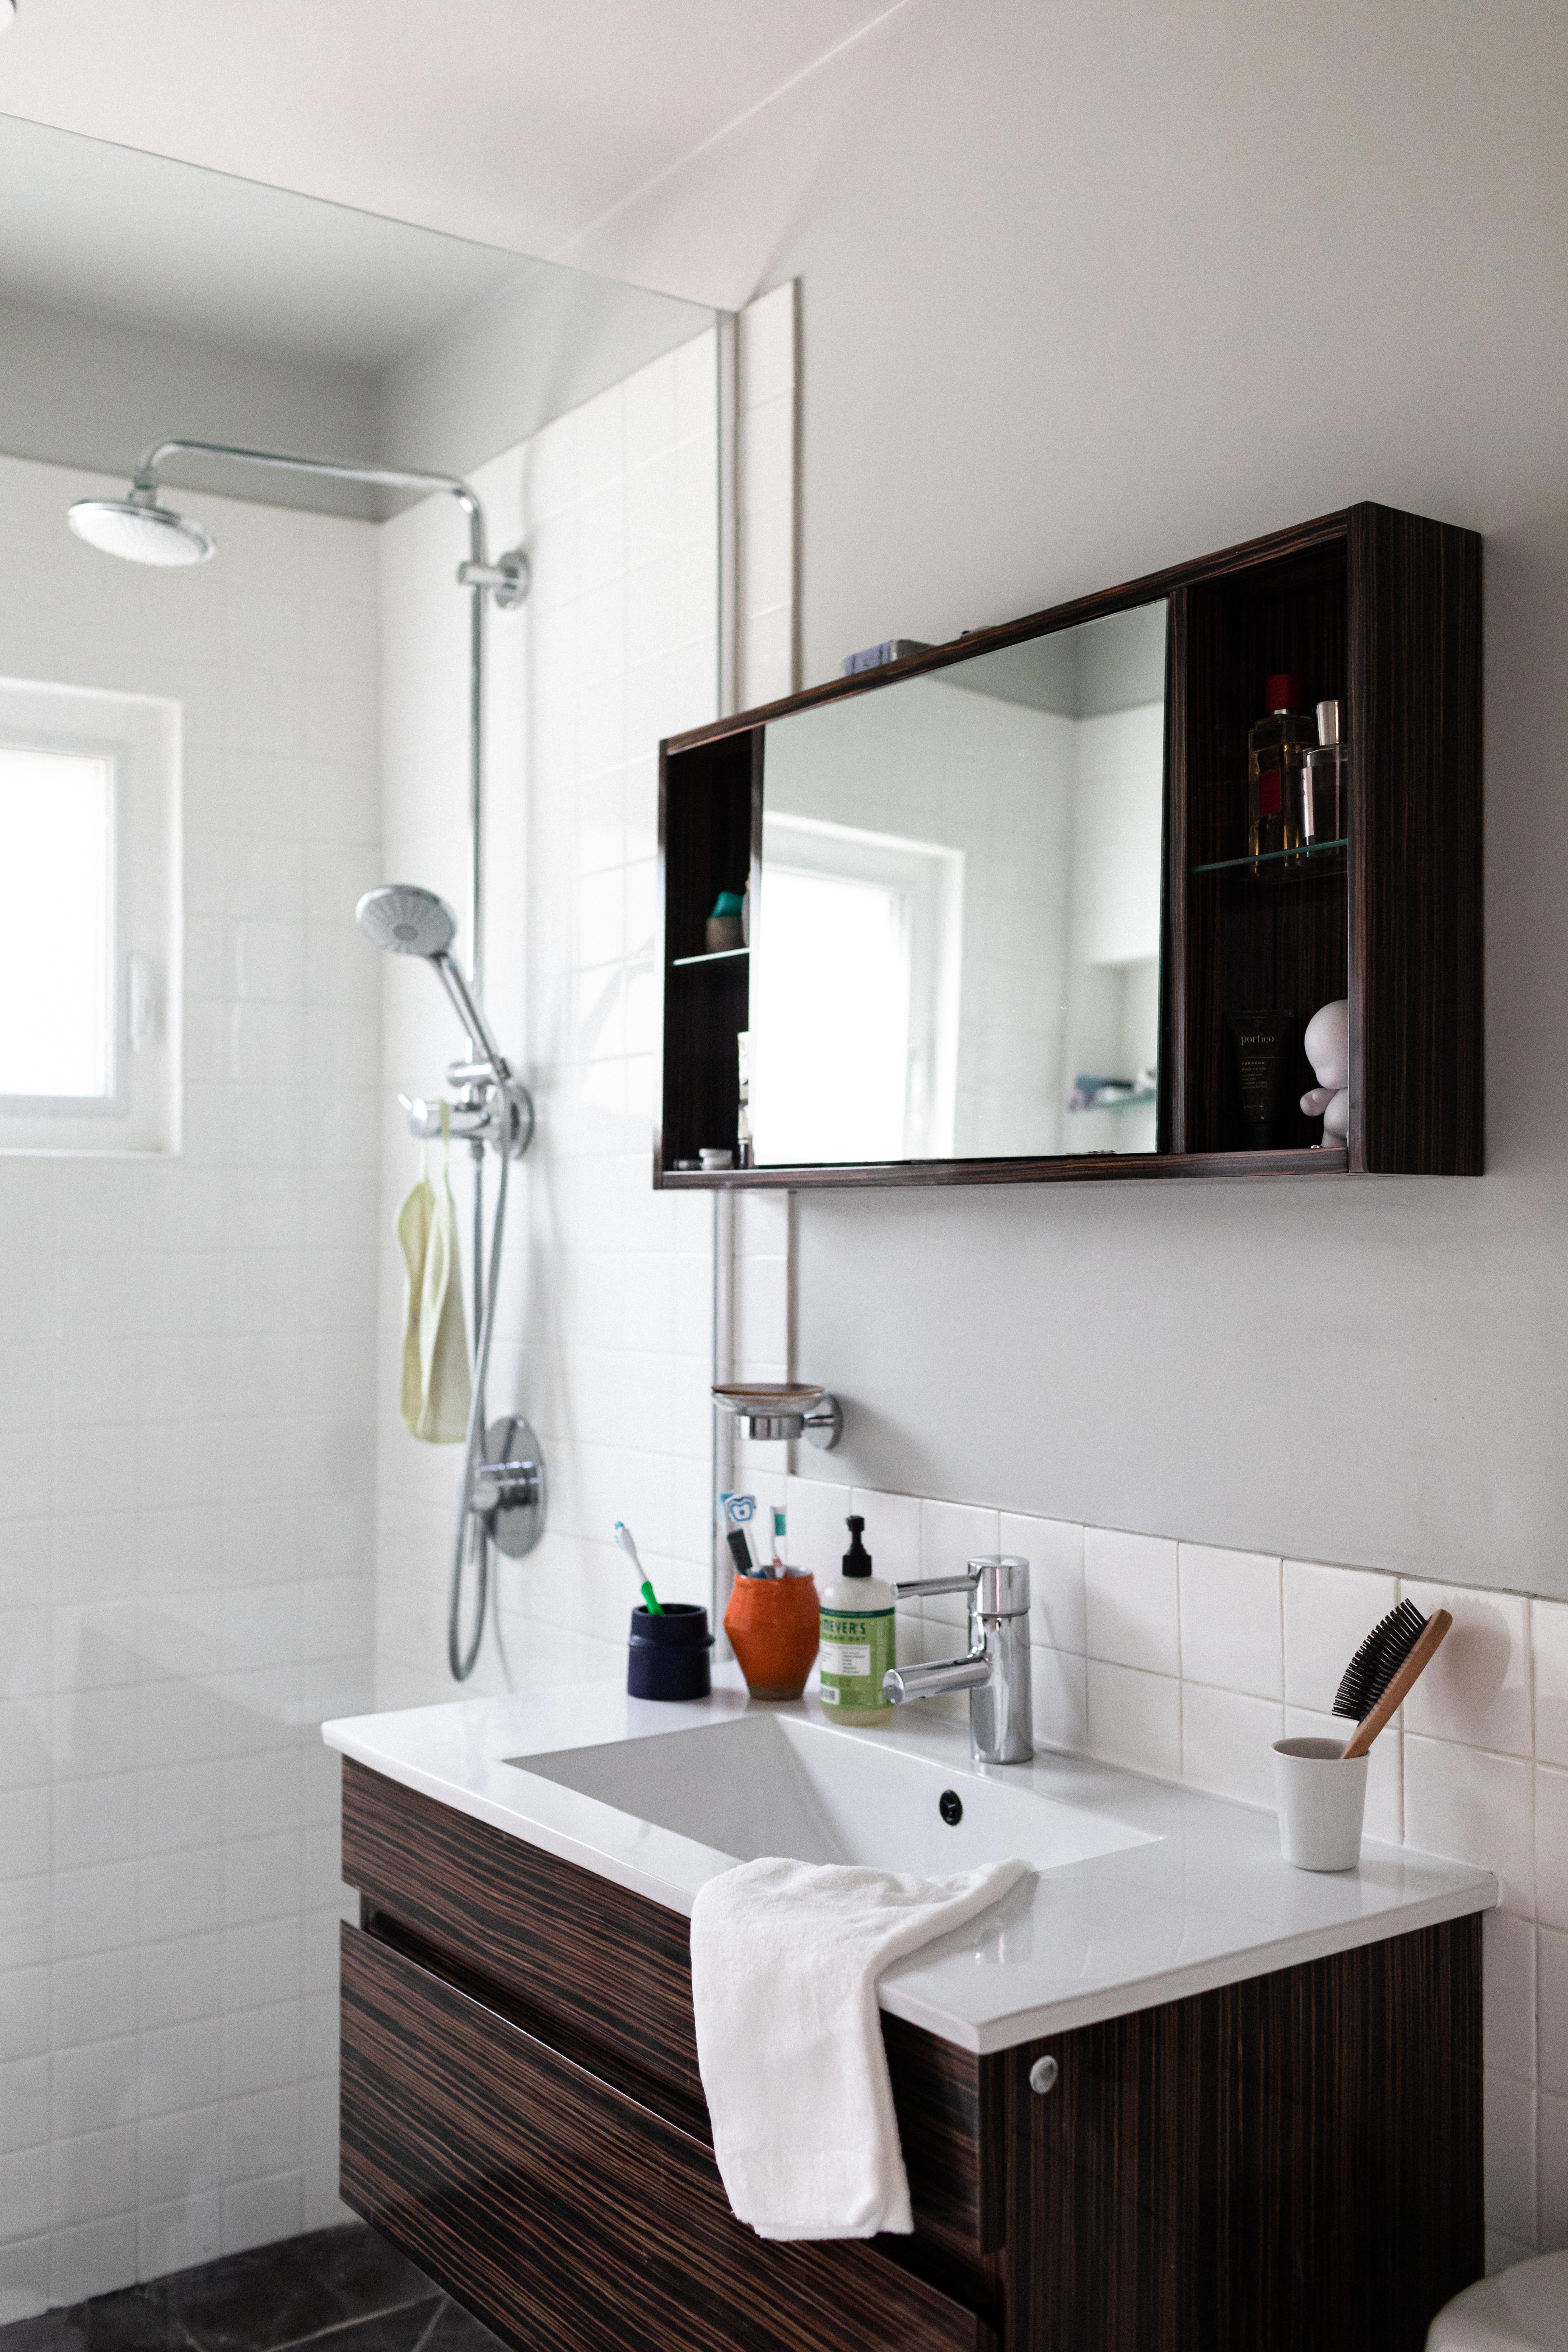 Bathroom Vanity Sizing Tips